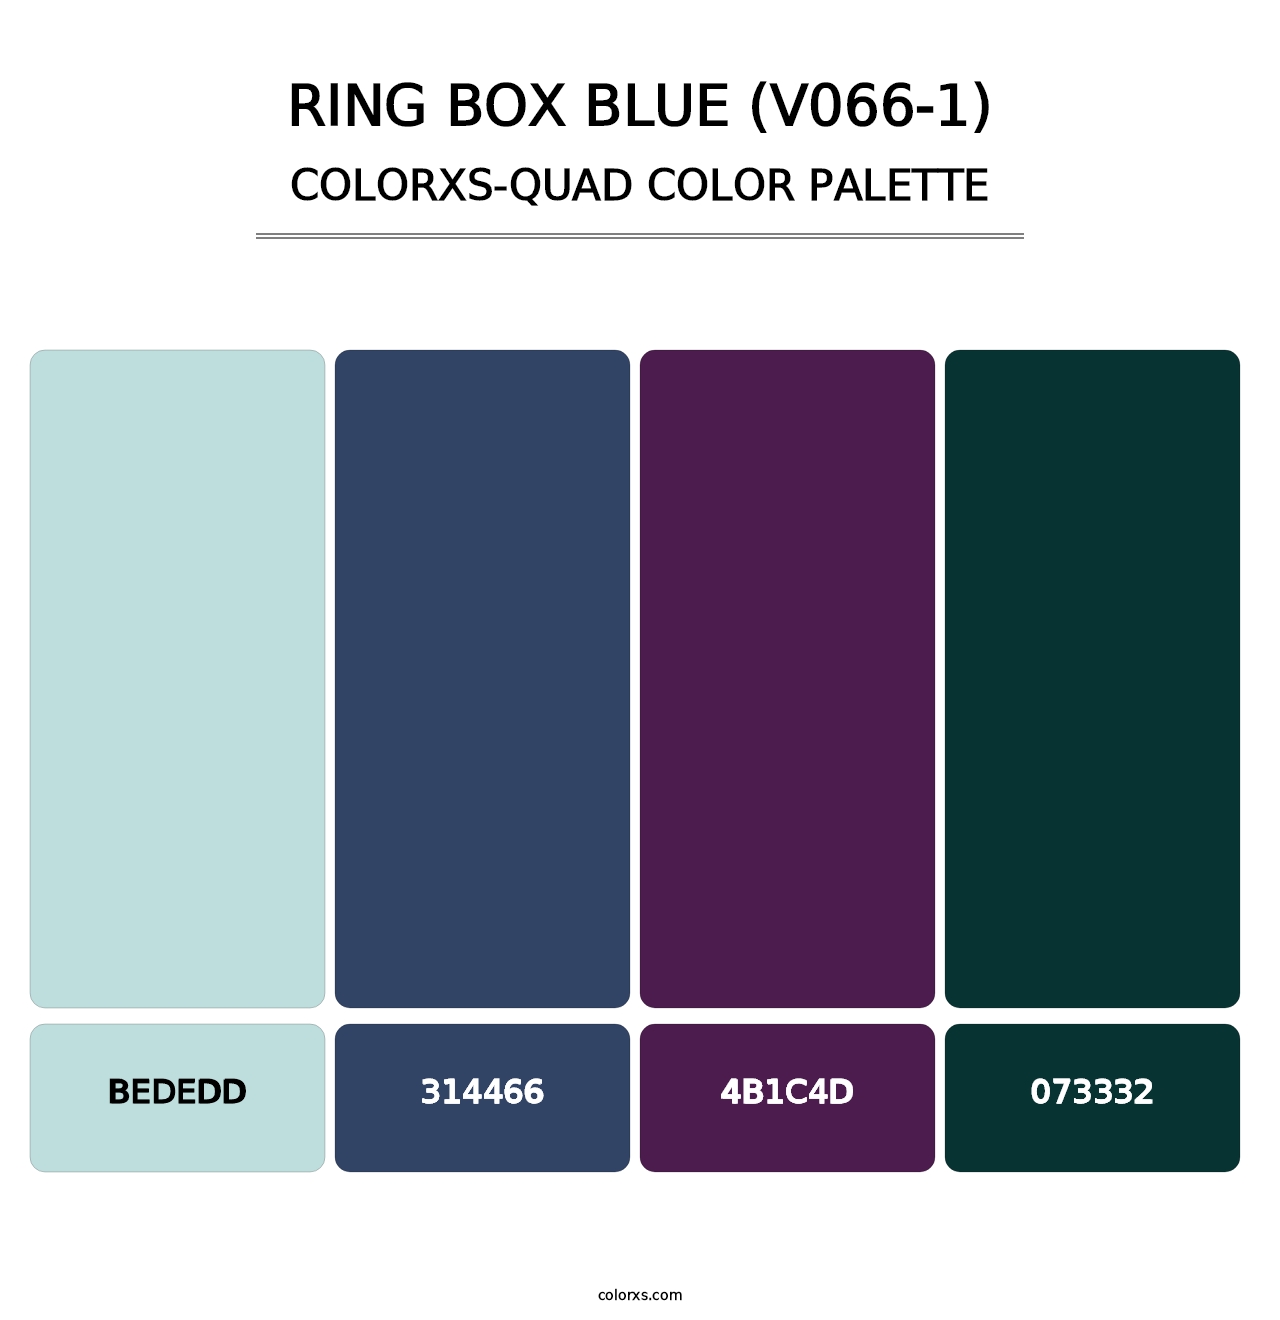 Ring Box Blue (V066-1) - Colorxs Quad Palette